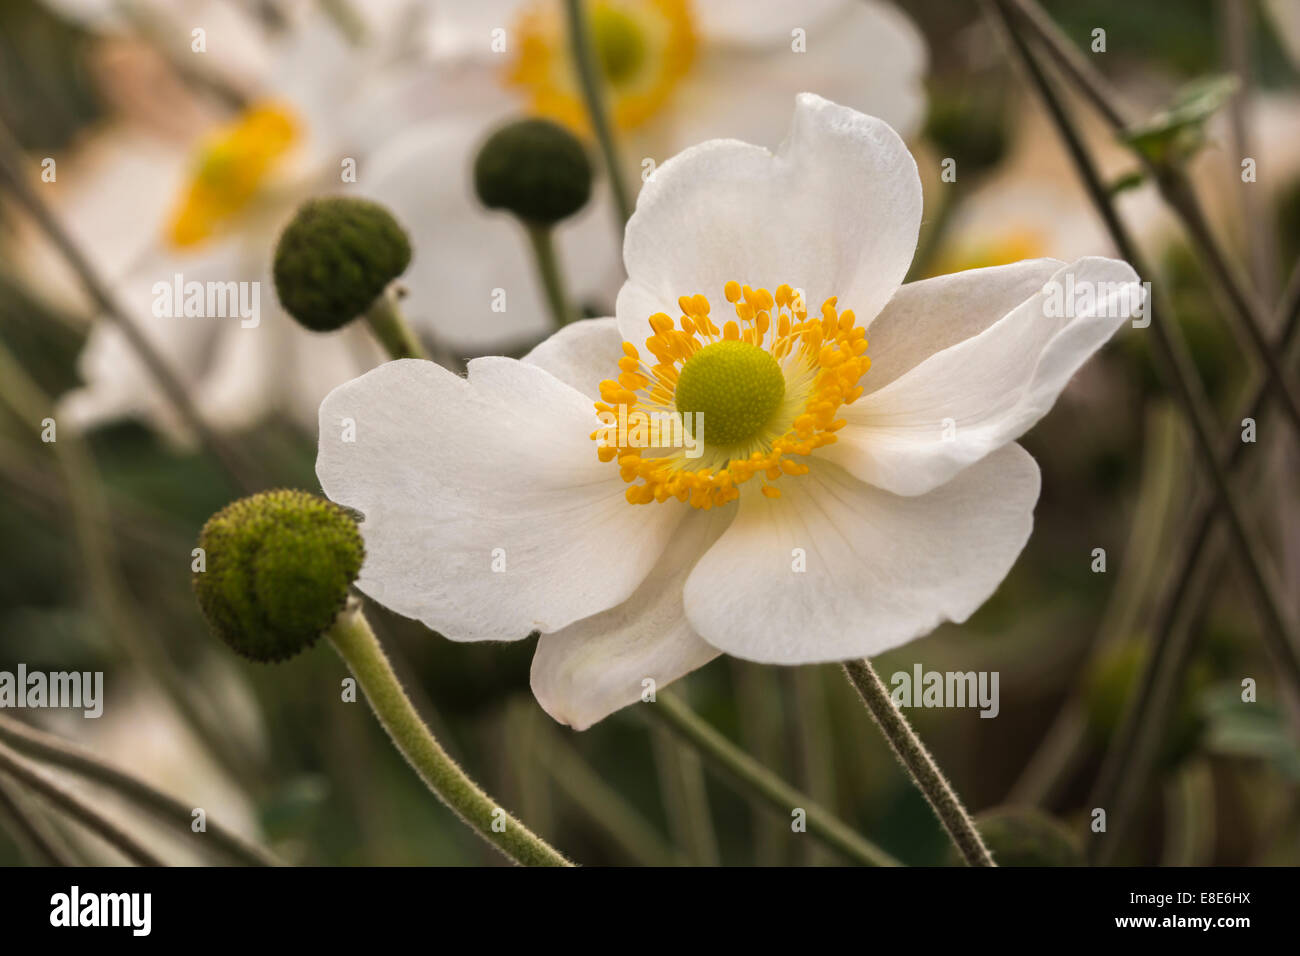 Flor blanca con centro amarillo fotografías e imágenes de alta resolución -  Alamy